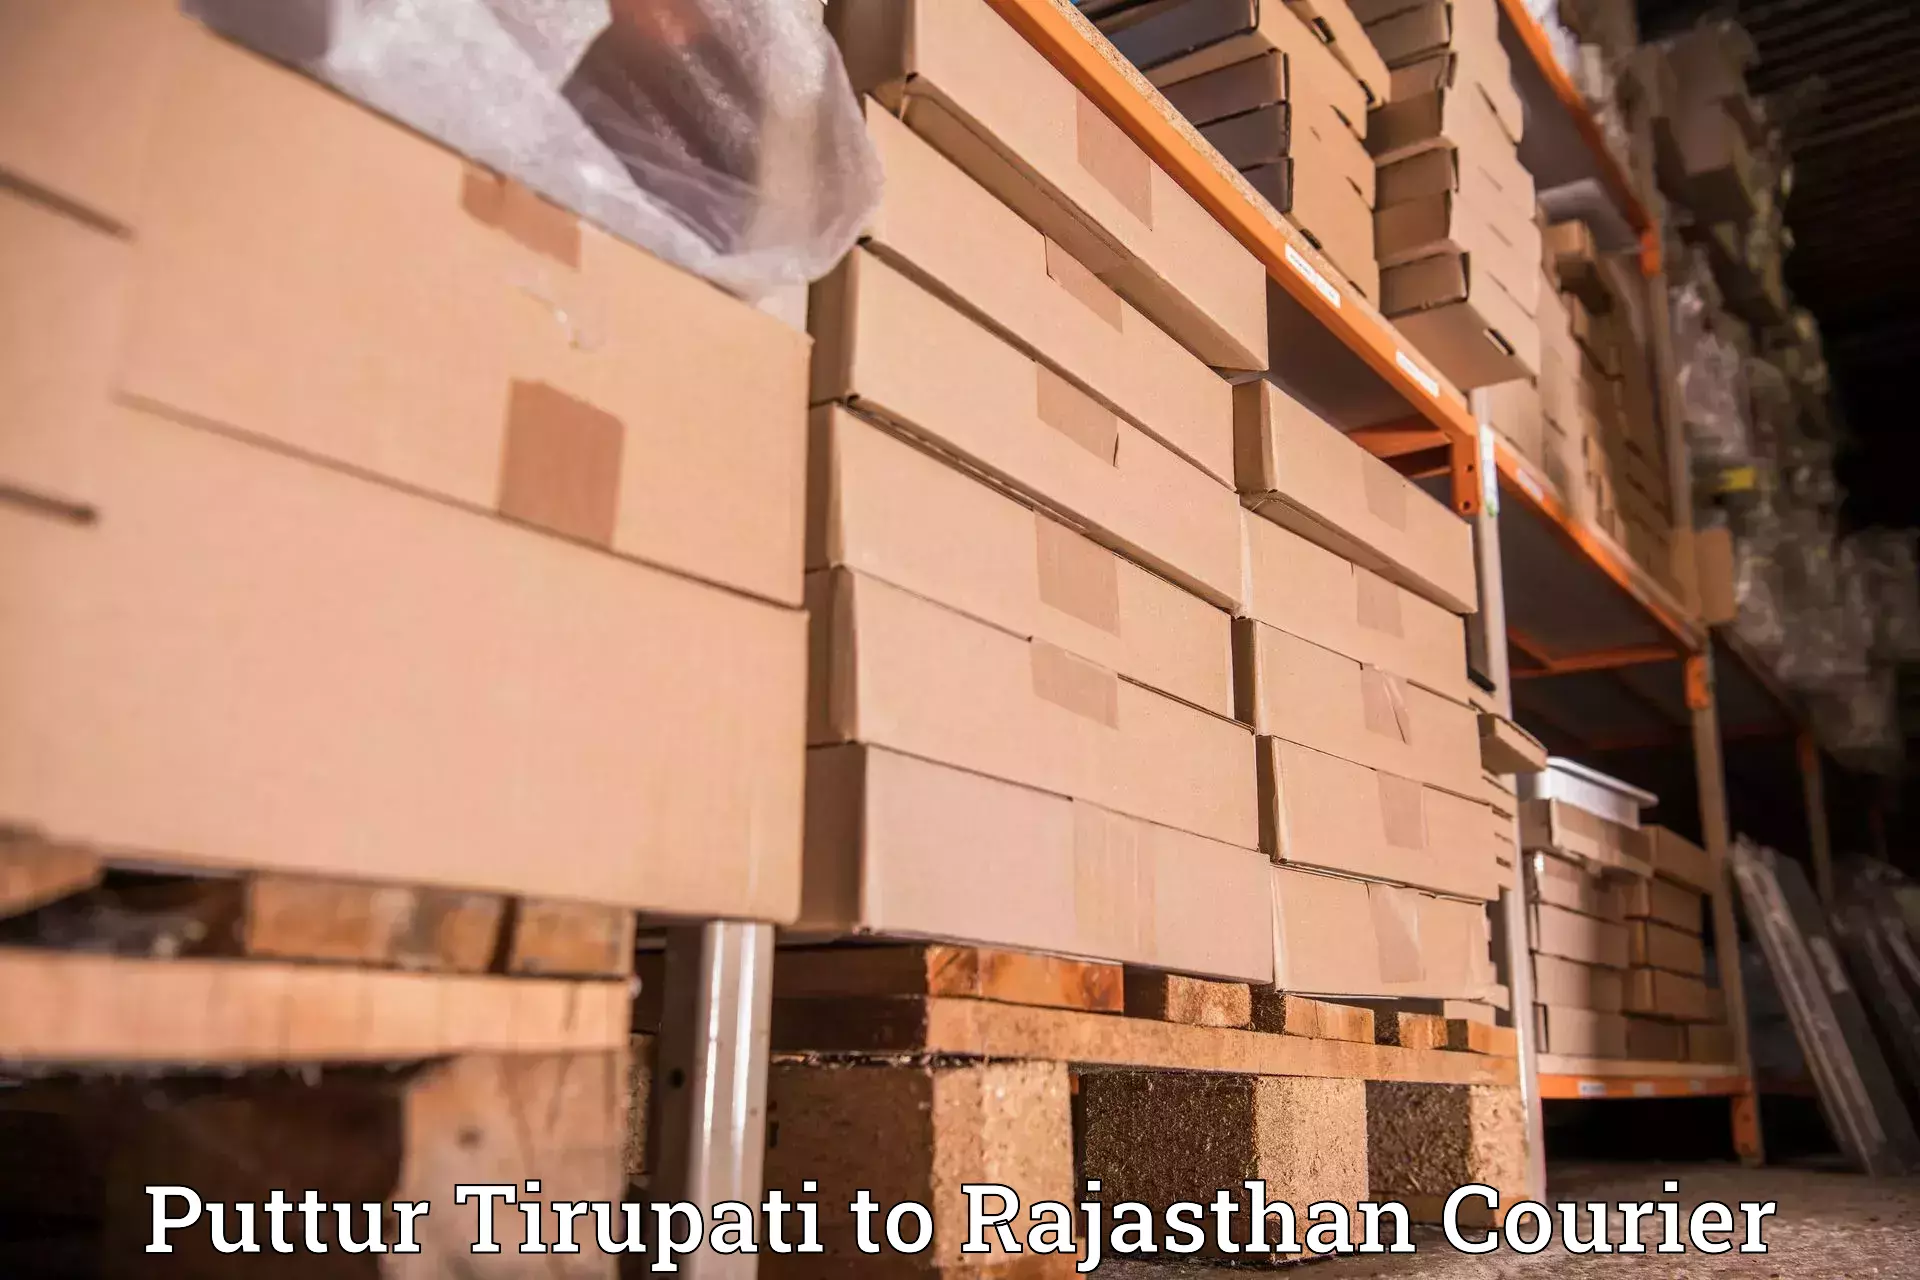 Advanced delivery network Puttur Tirupati to Neem ka Thana